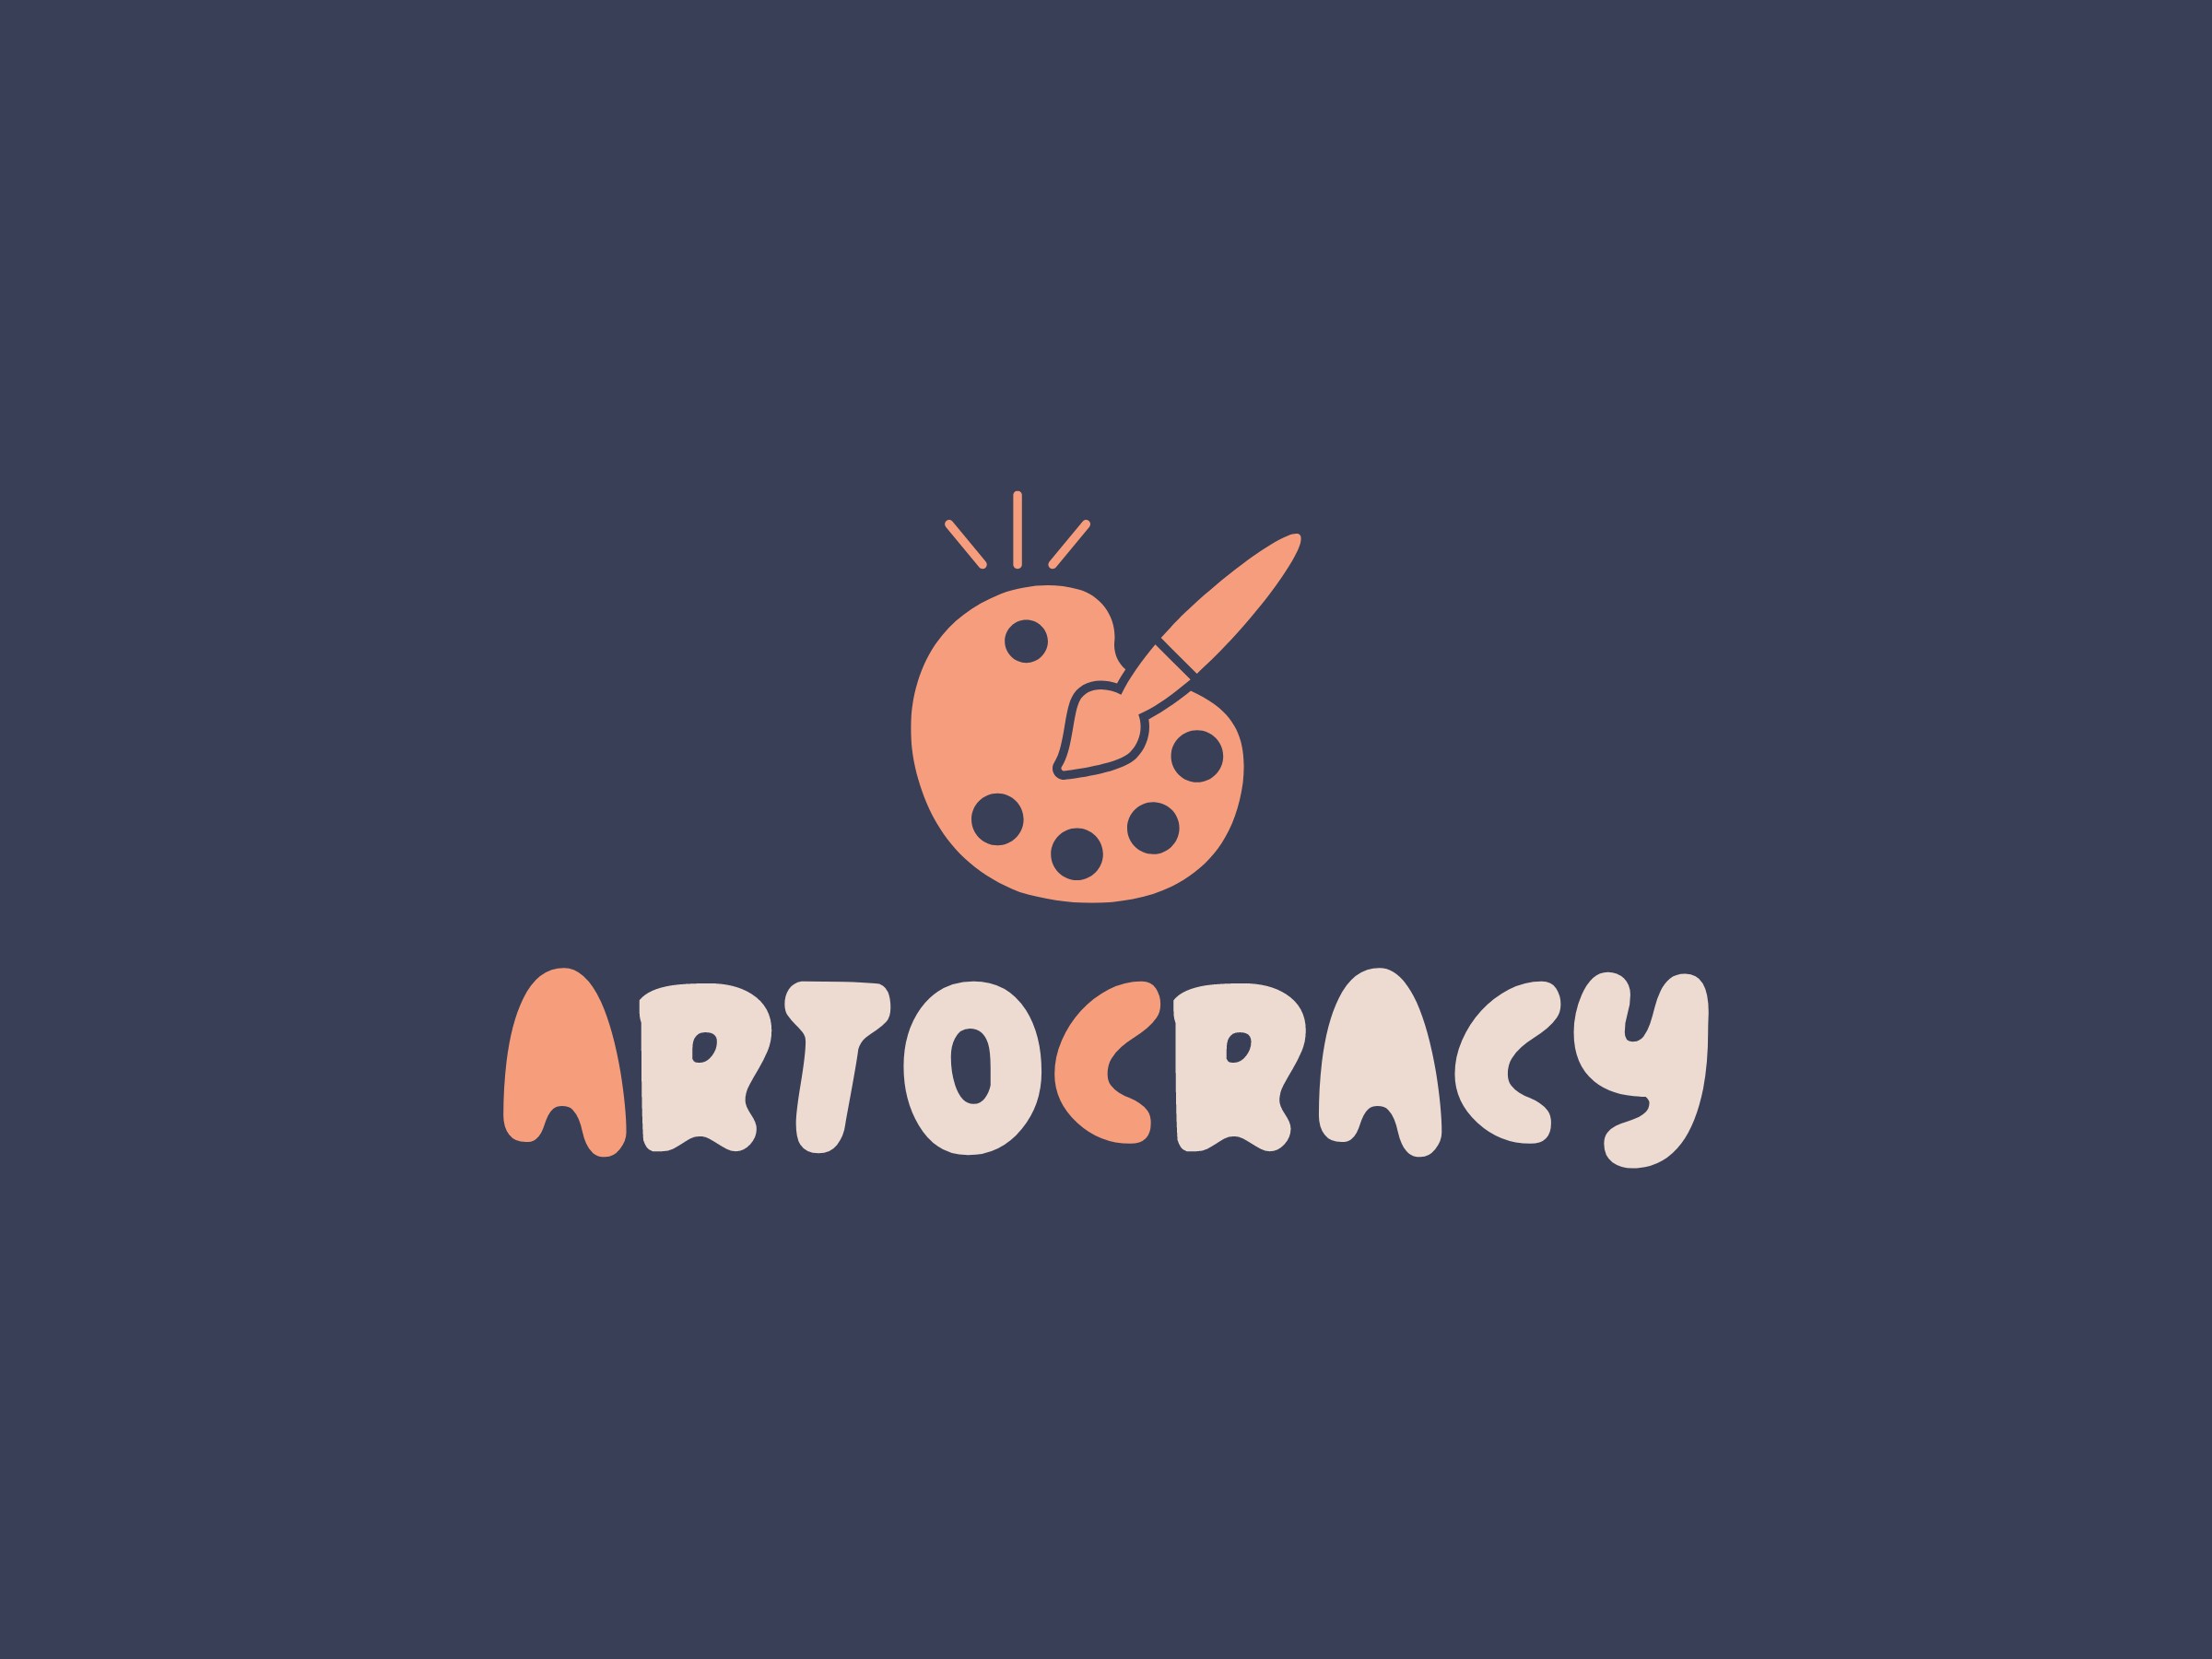 Artocracy - 